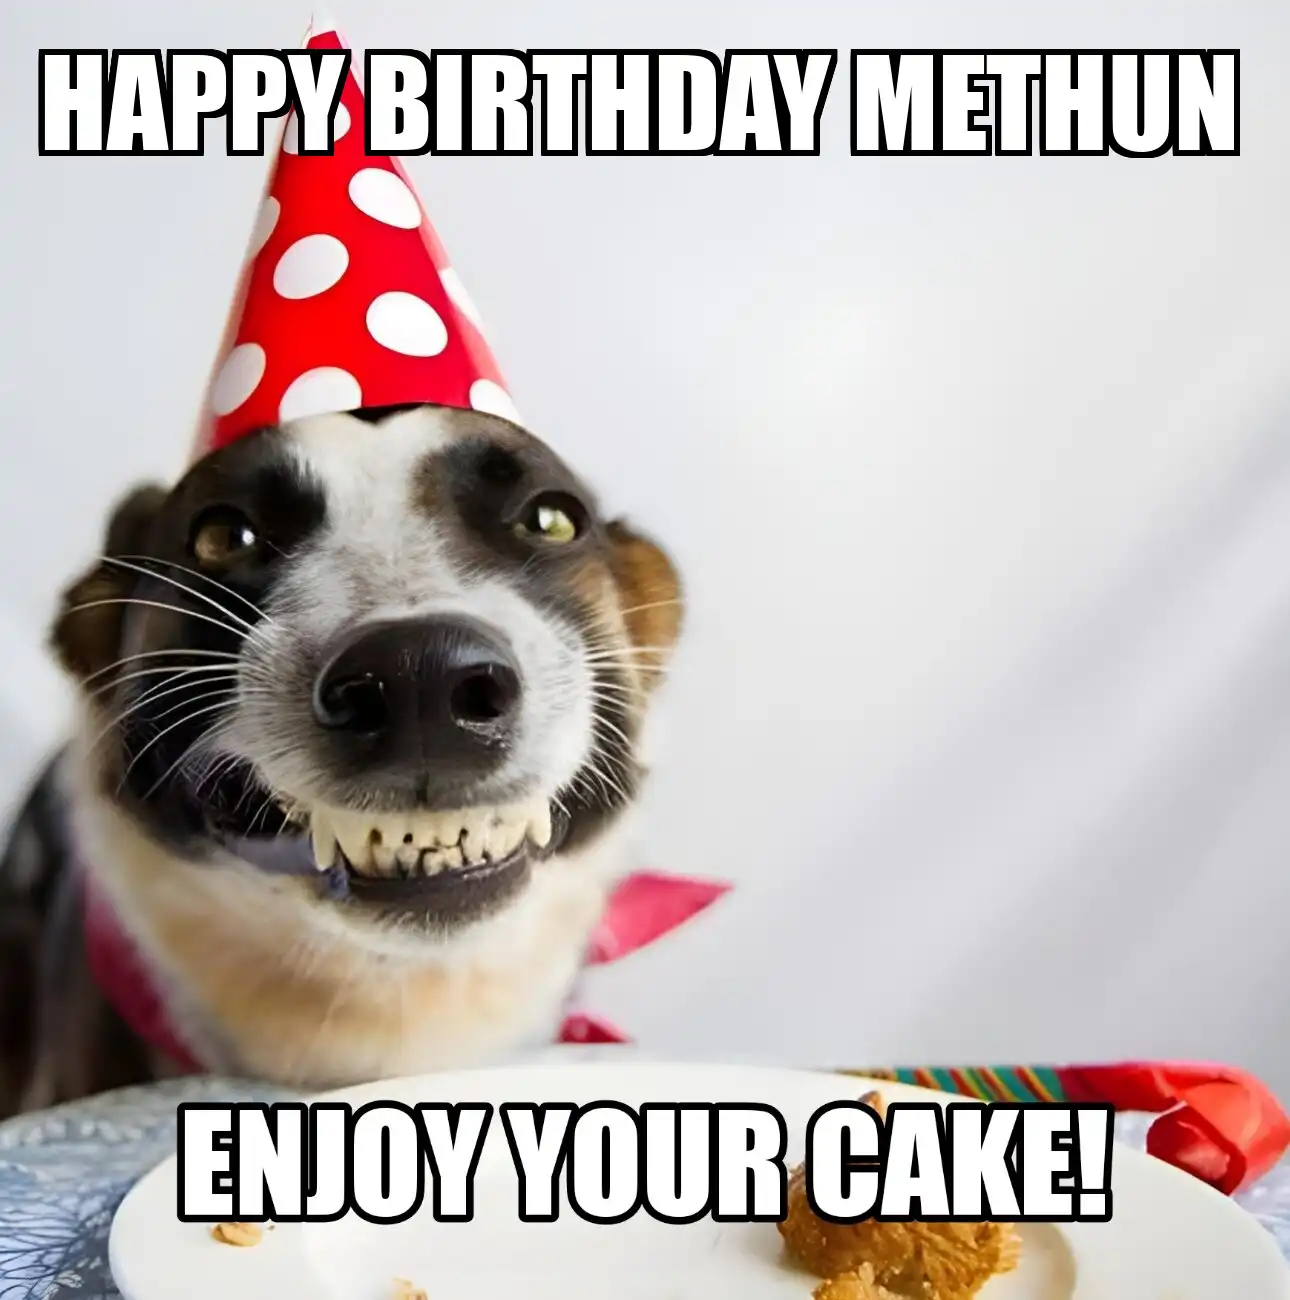 Happy Birthday Methun Enjoy Your Cake Dog Meme